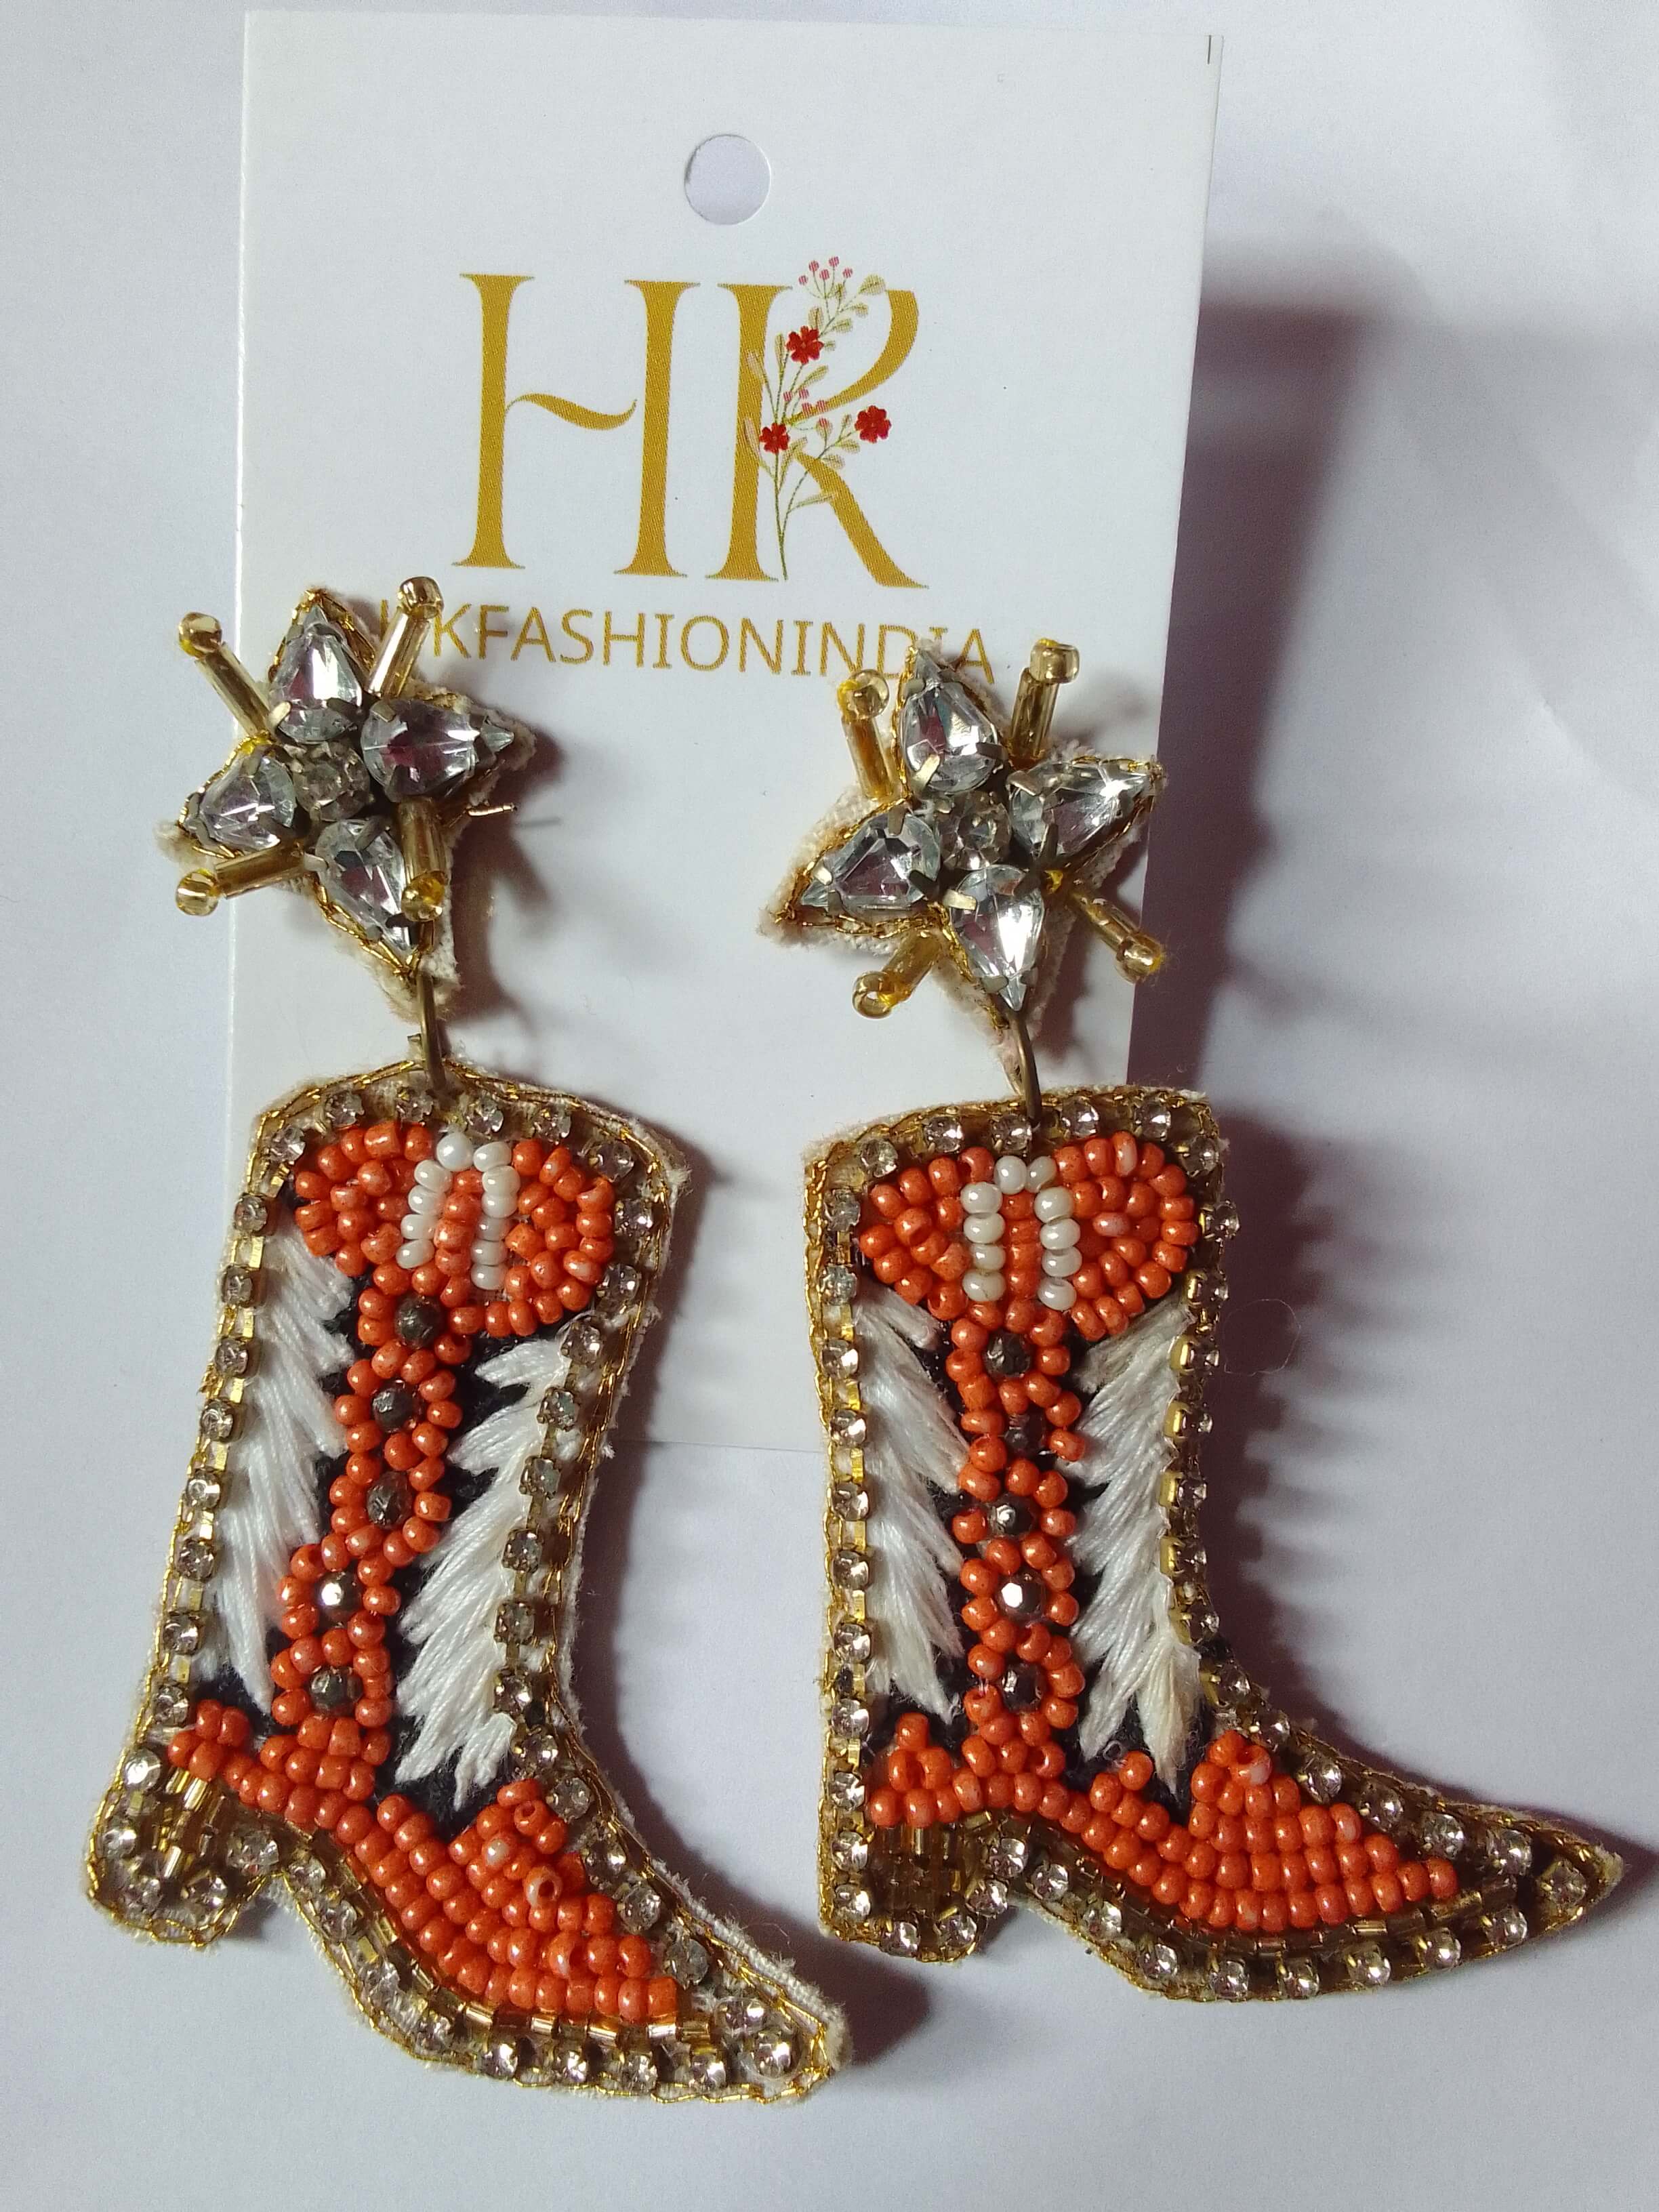 discover-artistry-in-beaded-earrings-handmade-treasures-hkfashionindia